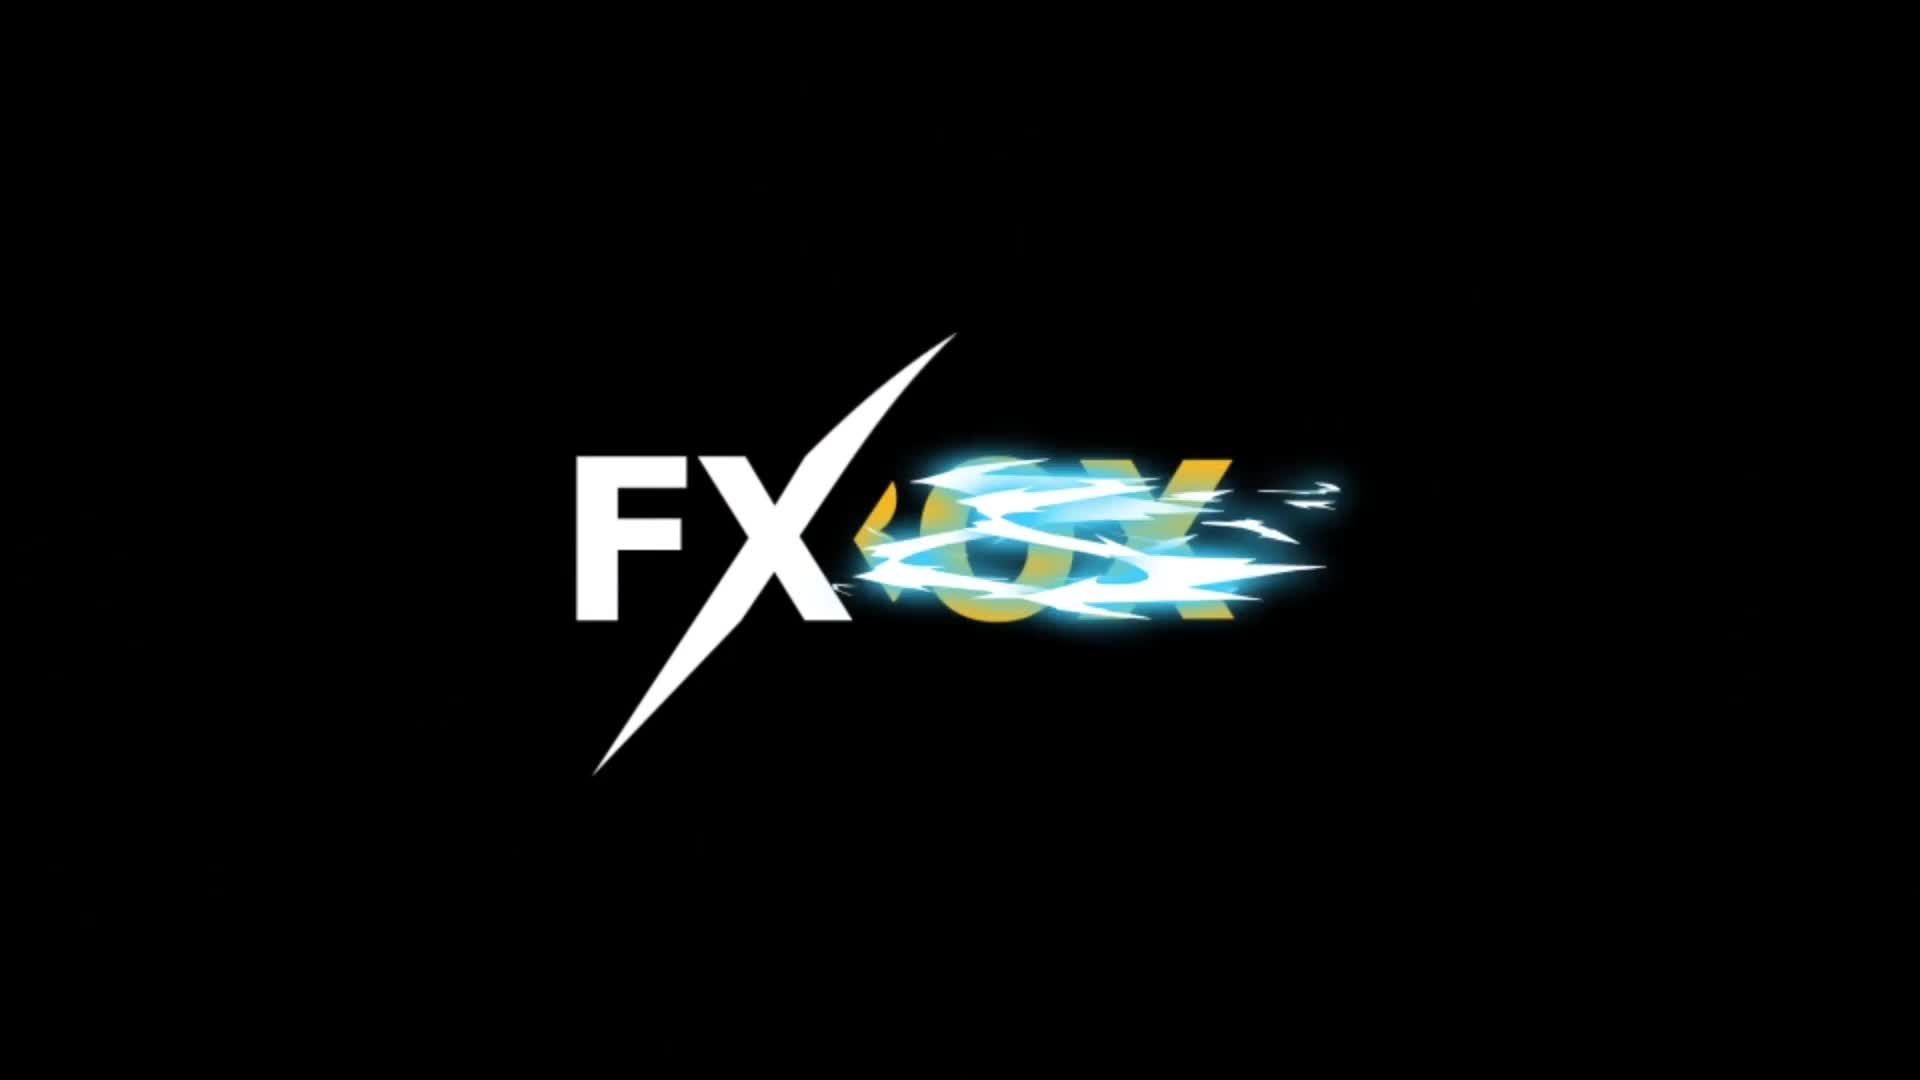 Flash FX ENERGY Elements And Transitions | DaVinci Resolve Videohive 33679371 DaVinci Resolve Image 1